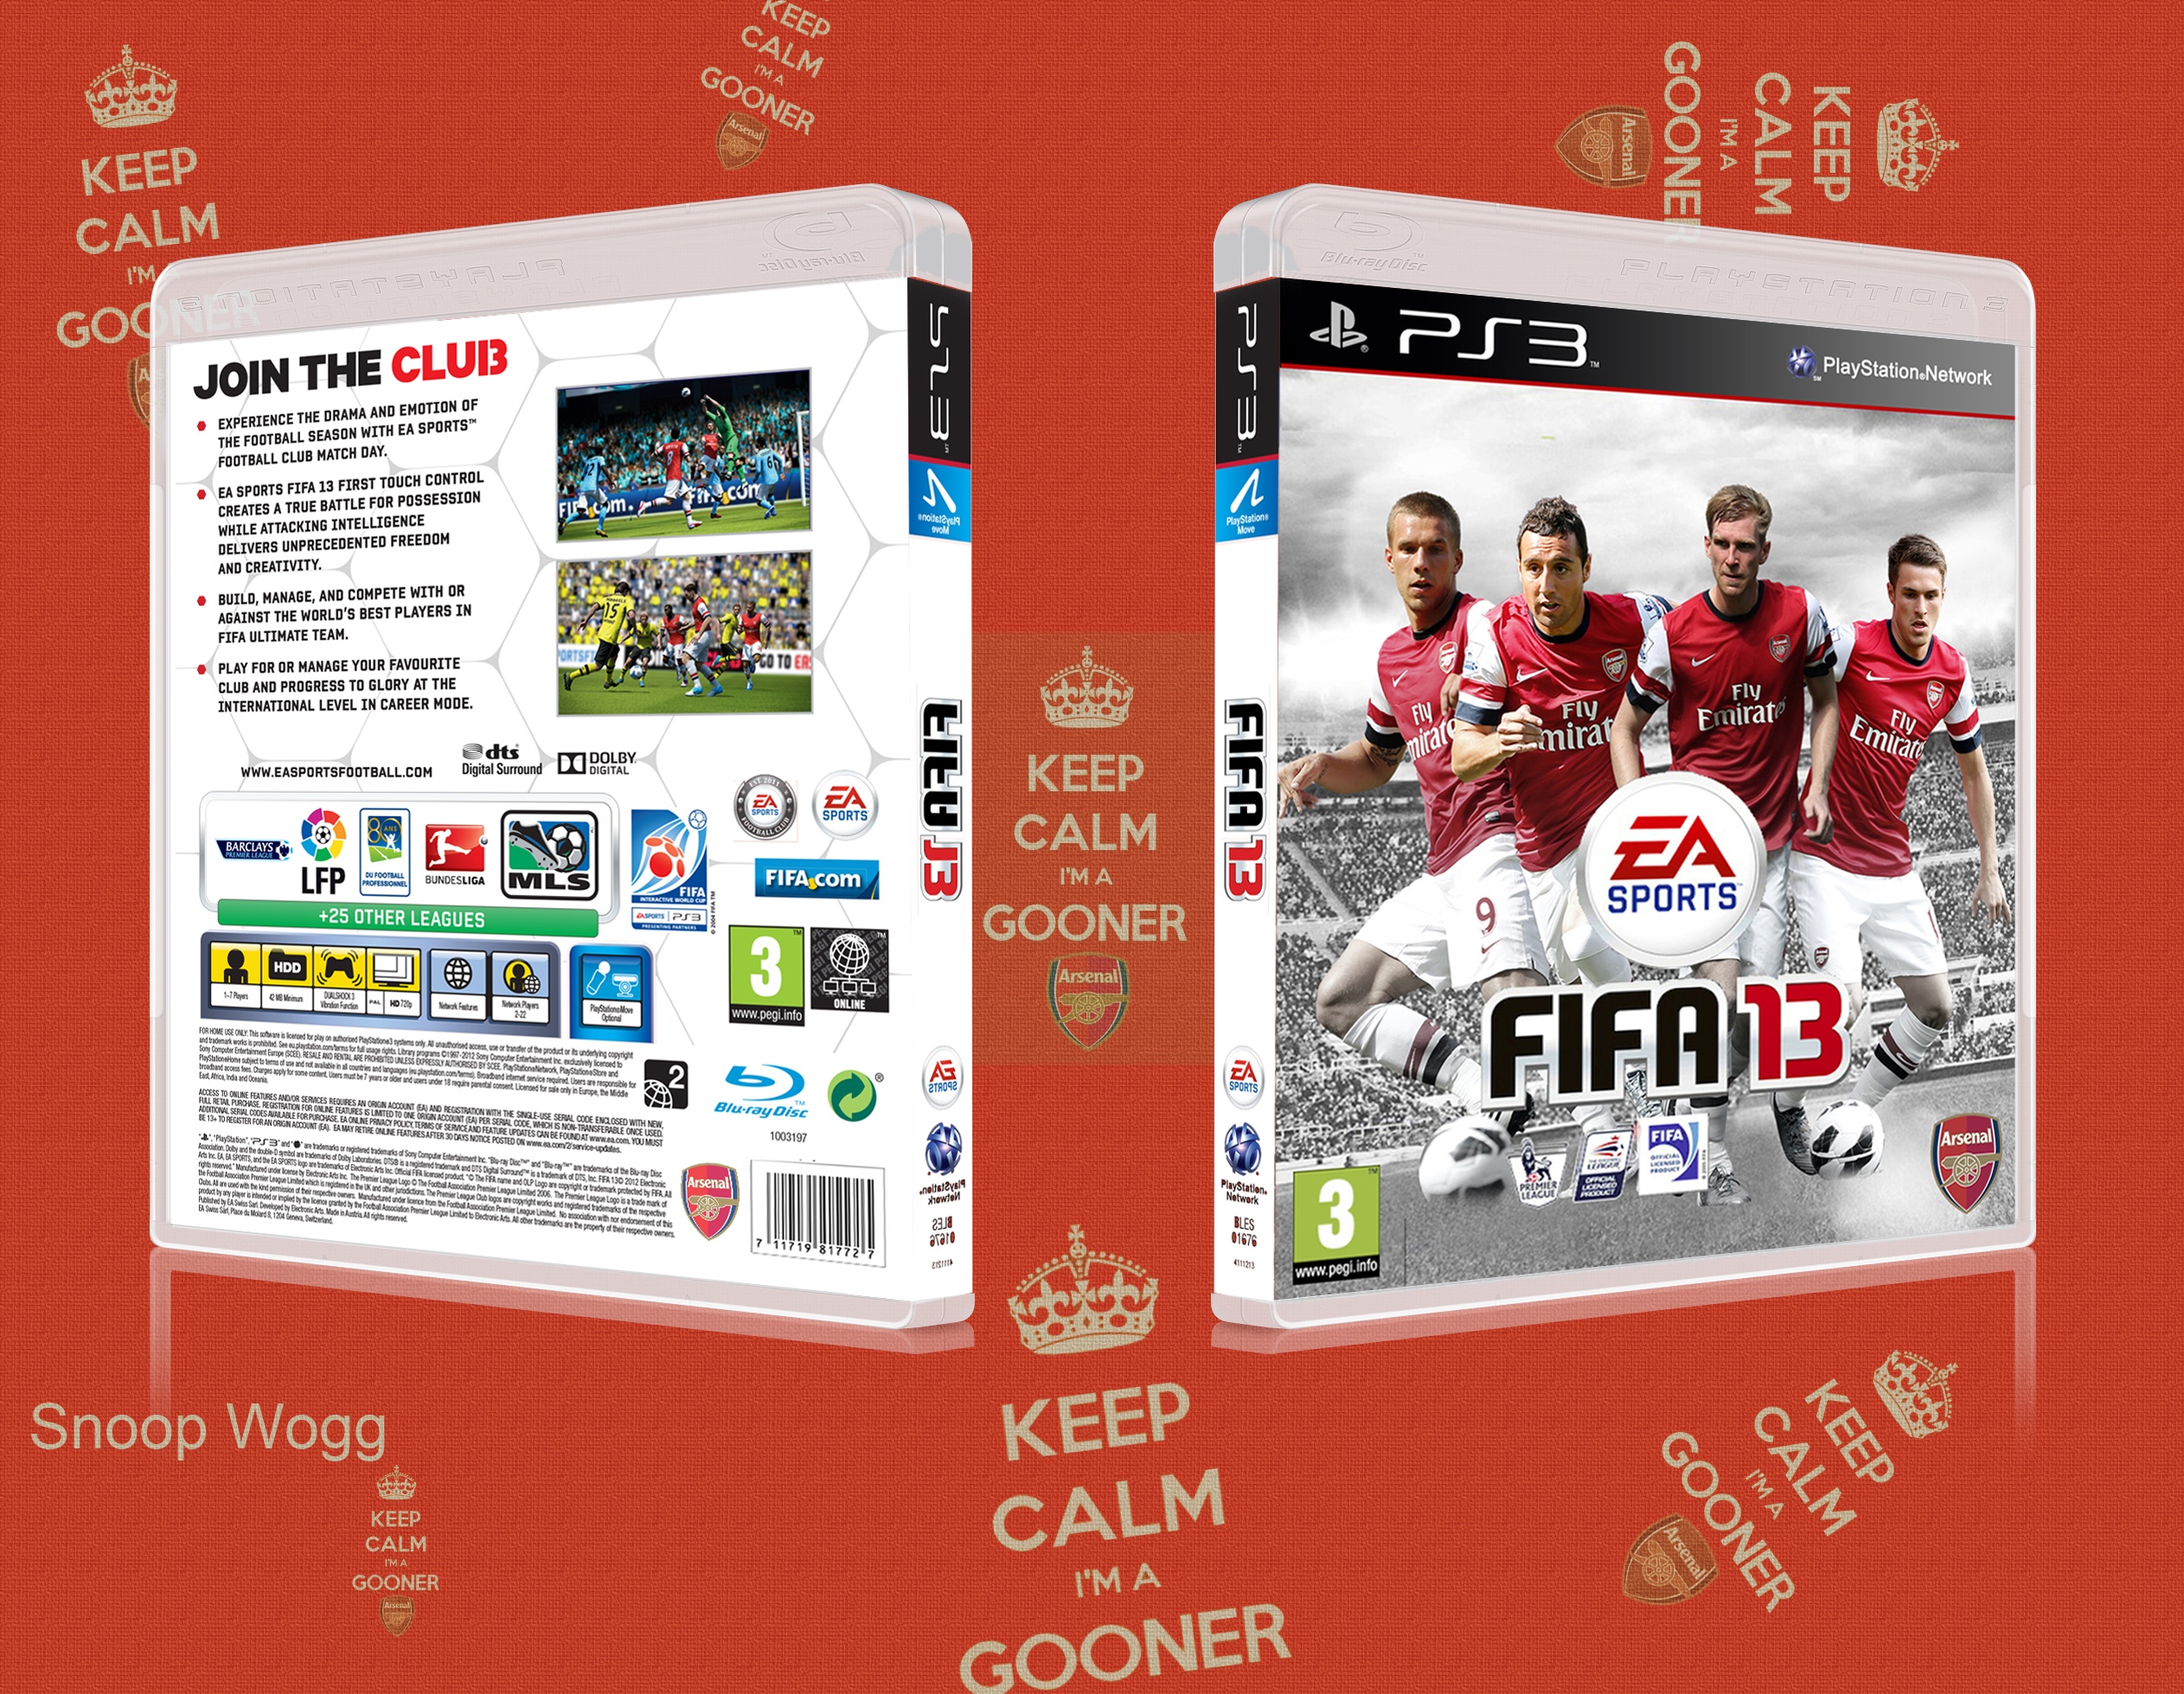 Fifa 13 Arsenal Edition box cover